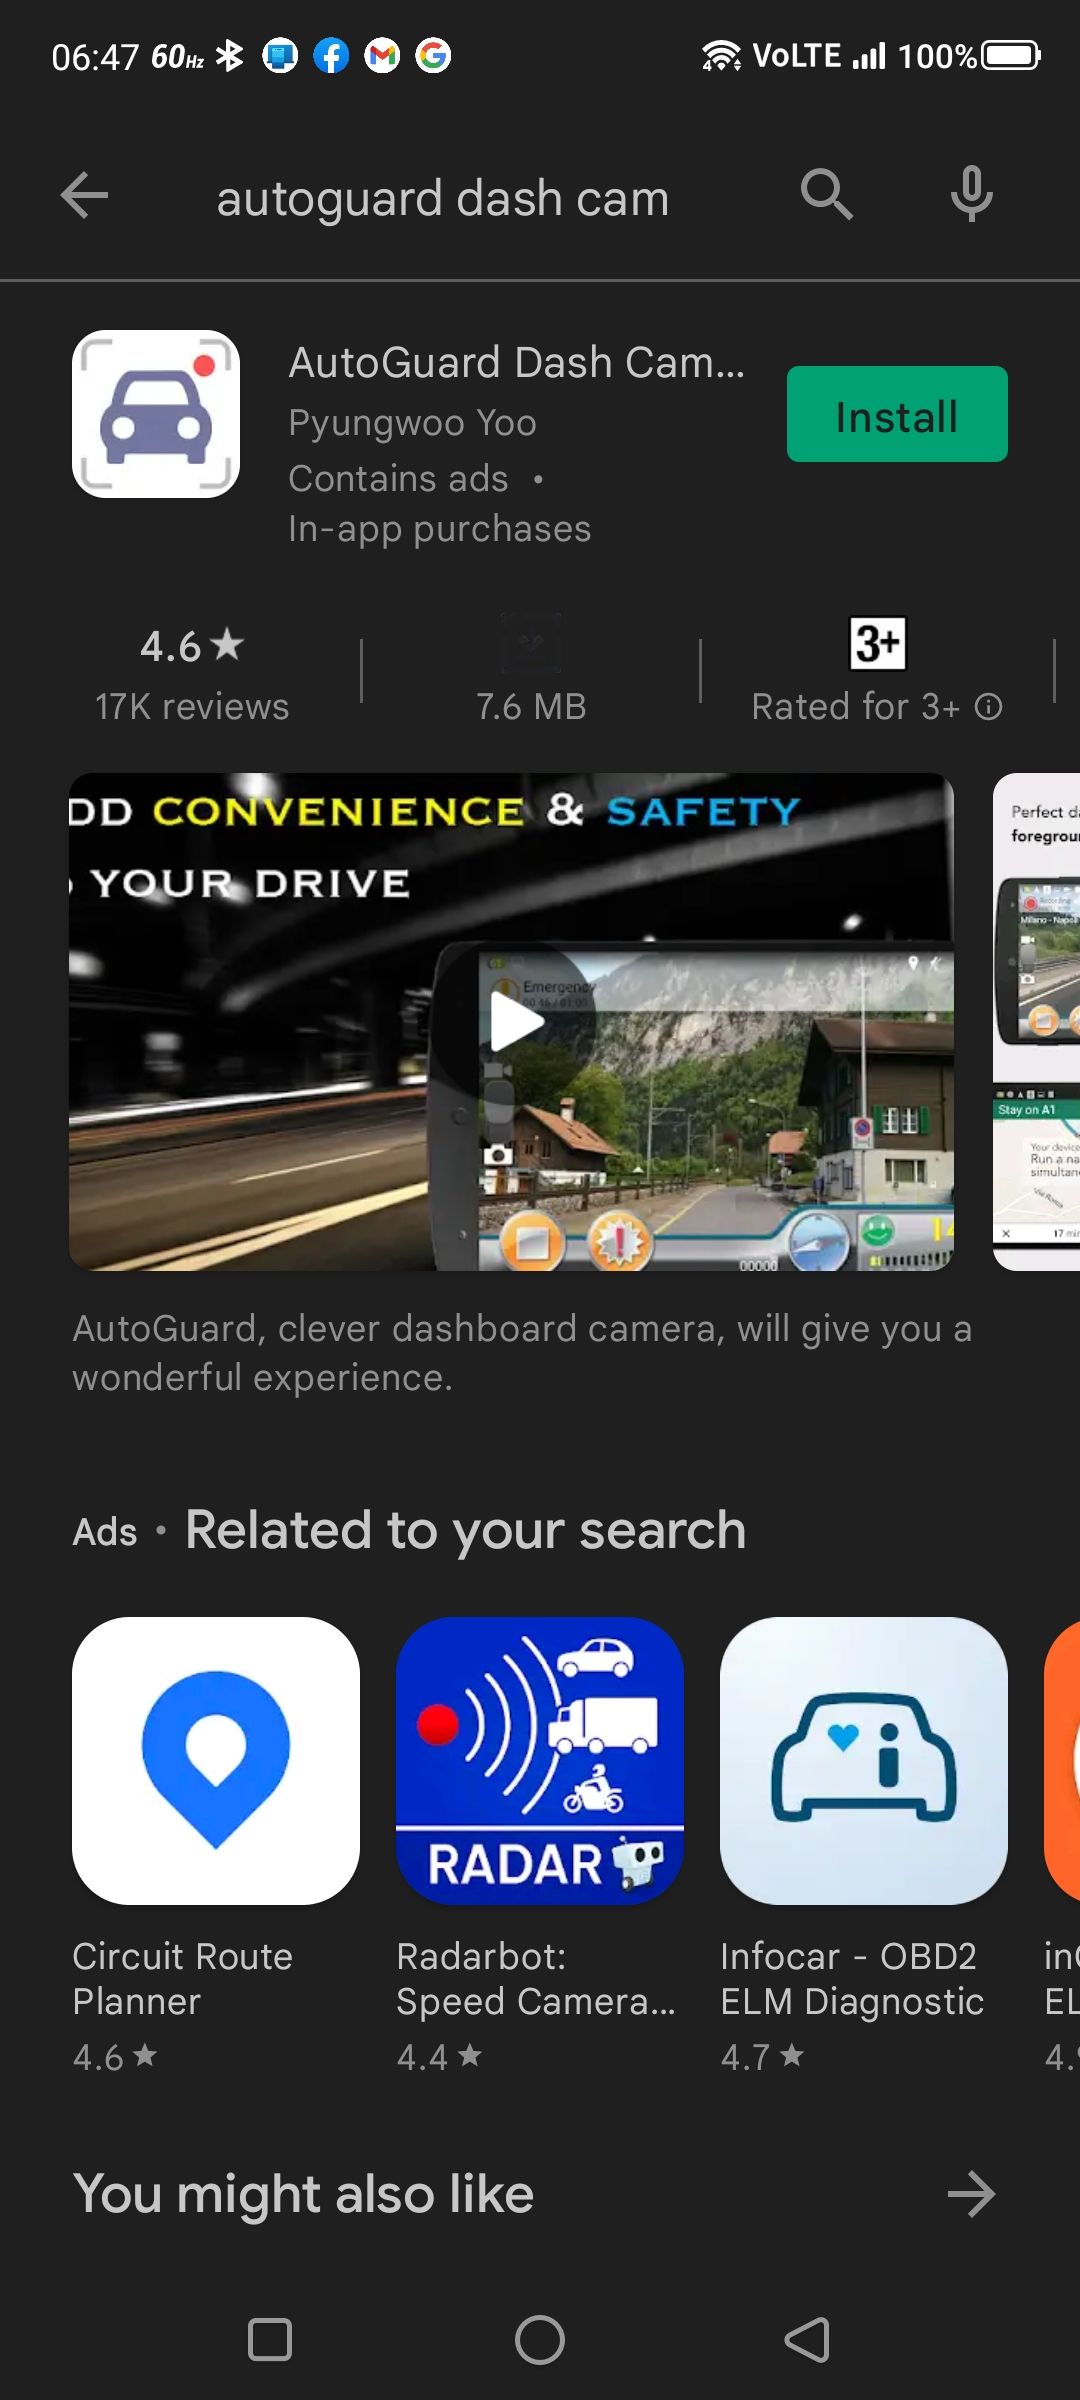 AutoGuard Dash Cam app on Play Store